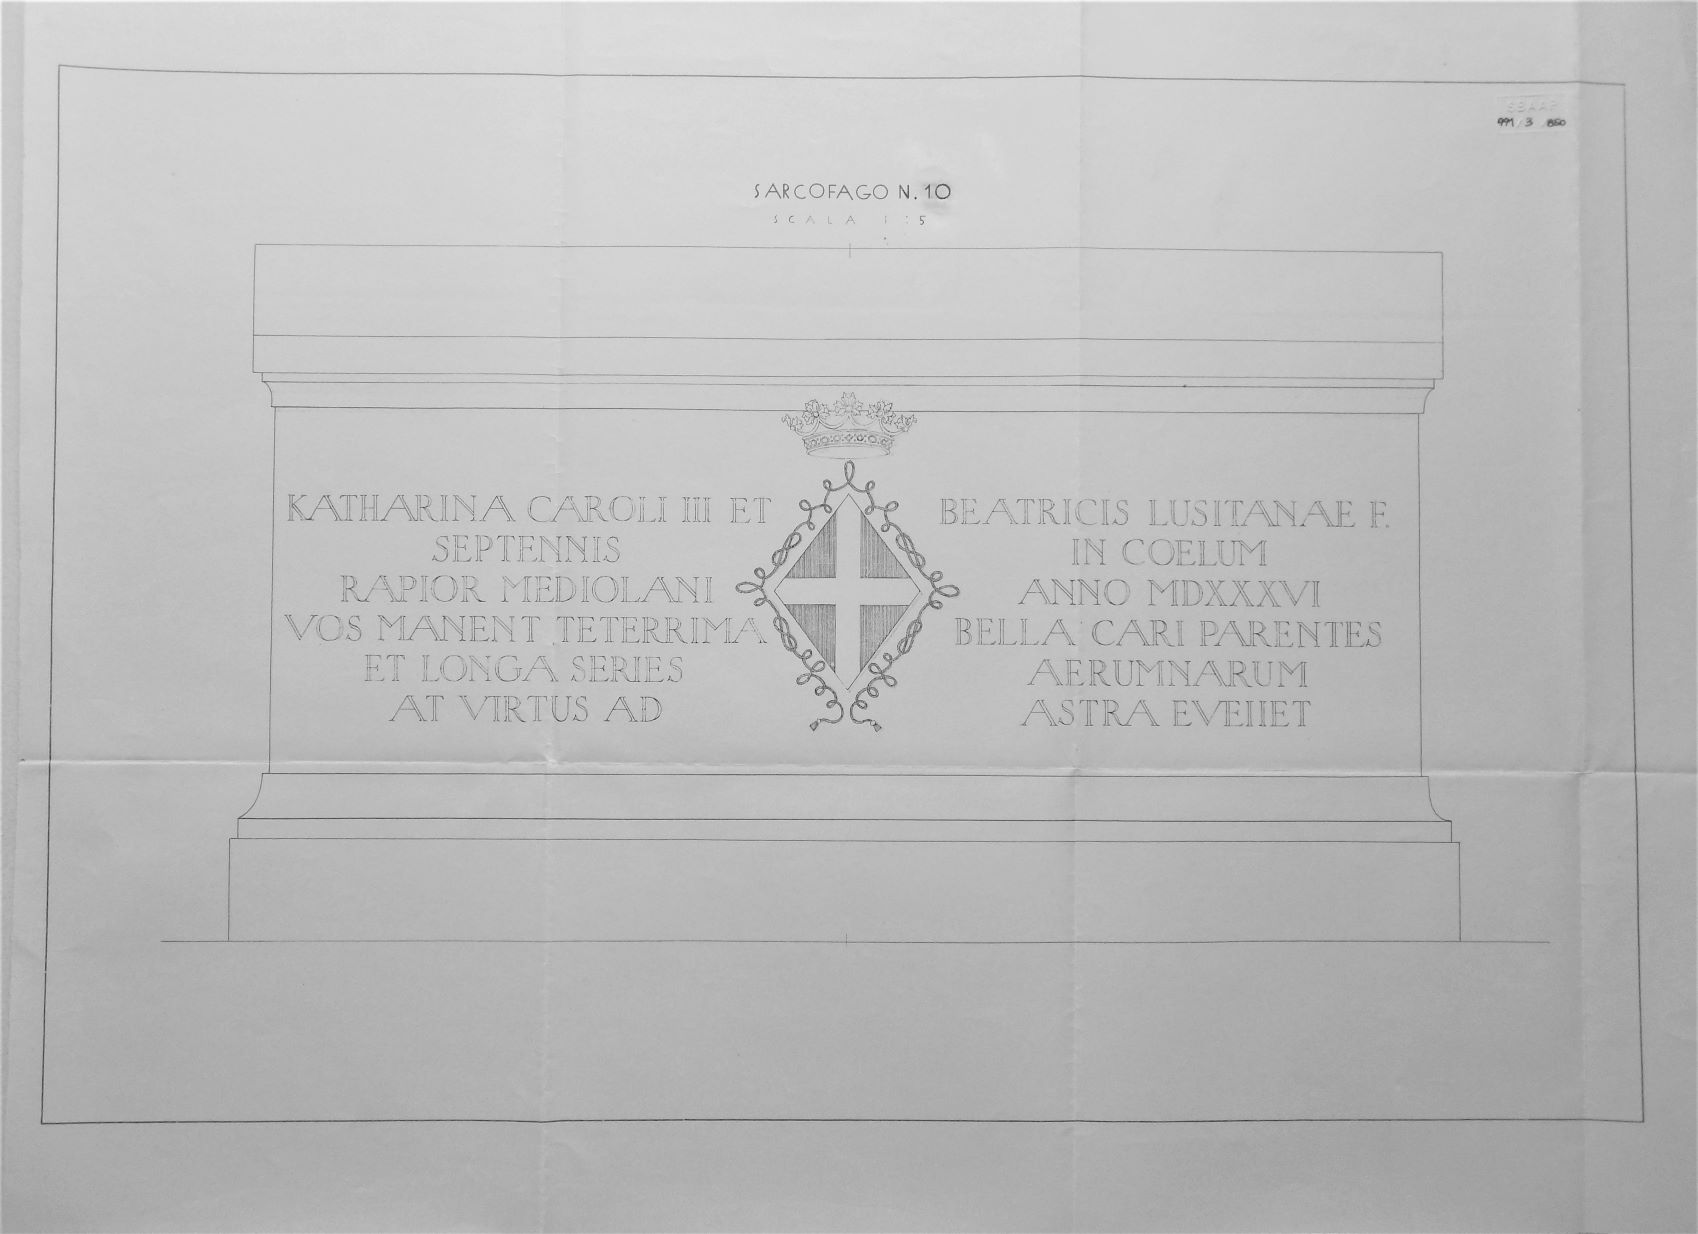 Sacra di San Michele/ Sarcofago n. 10 - scala 1:5, Sacra di San Michele a Sant'Ambrogio di Susa (TO) - Sarcofago n. 10 - scala 1:5 (disegno) di Chierici Umberto (cerchia) (secondo quarto sec. XX)